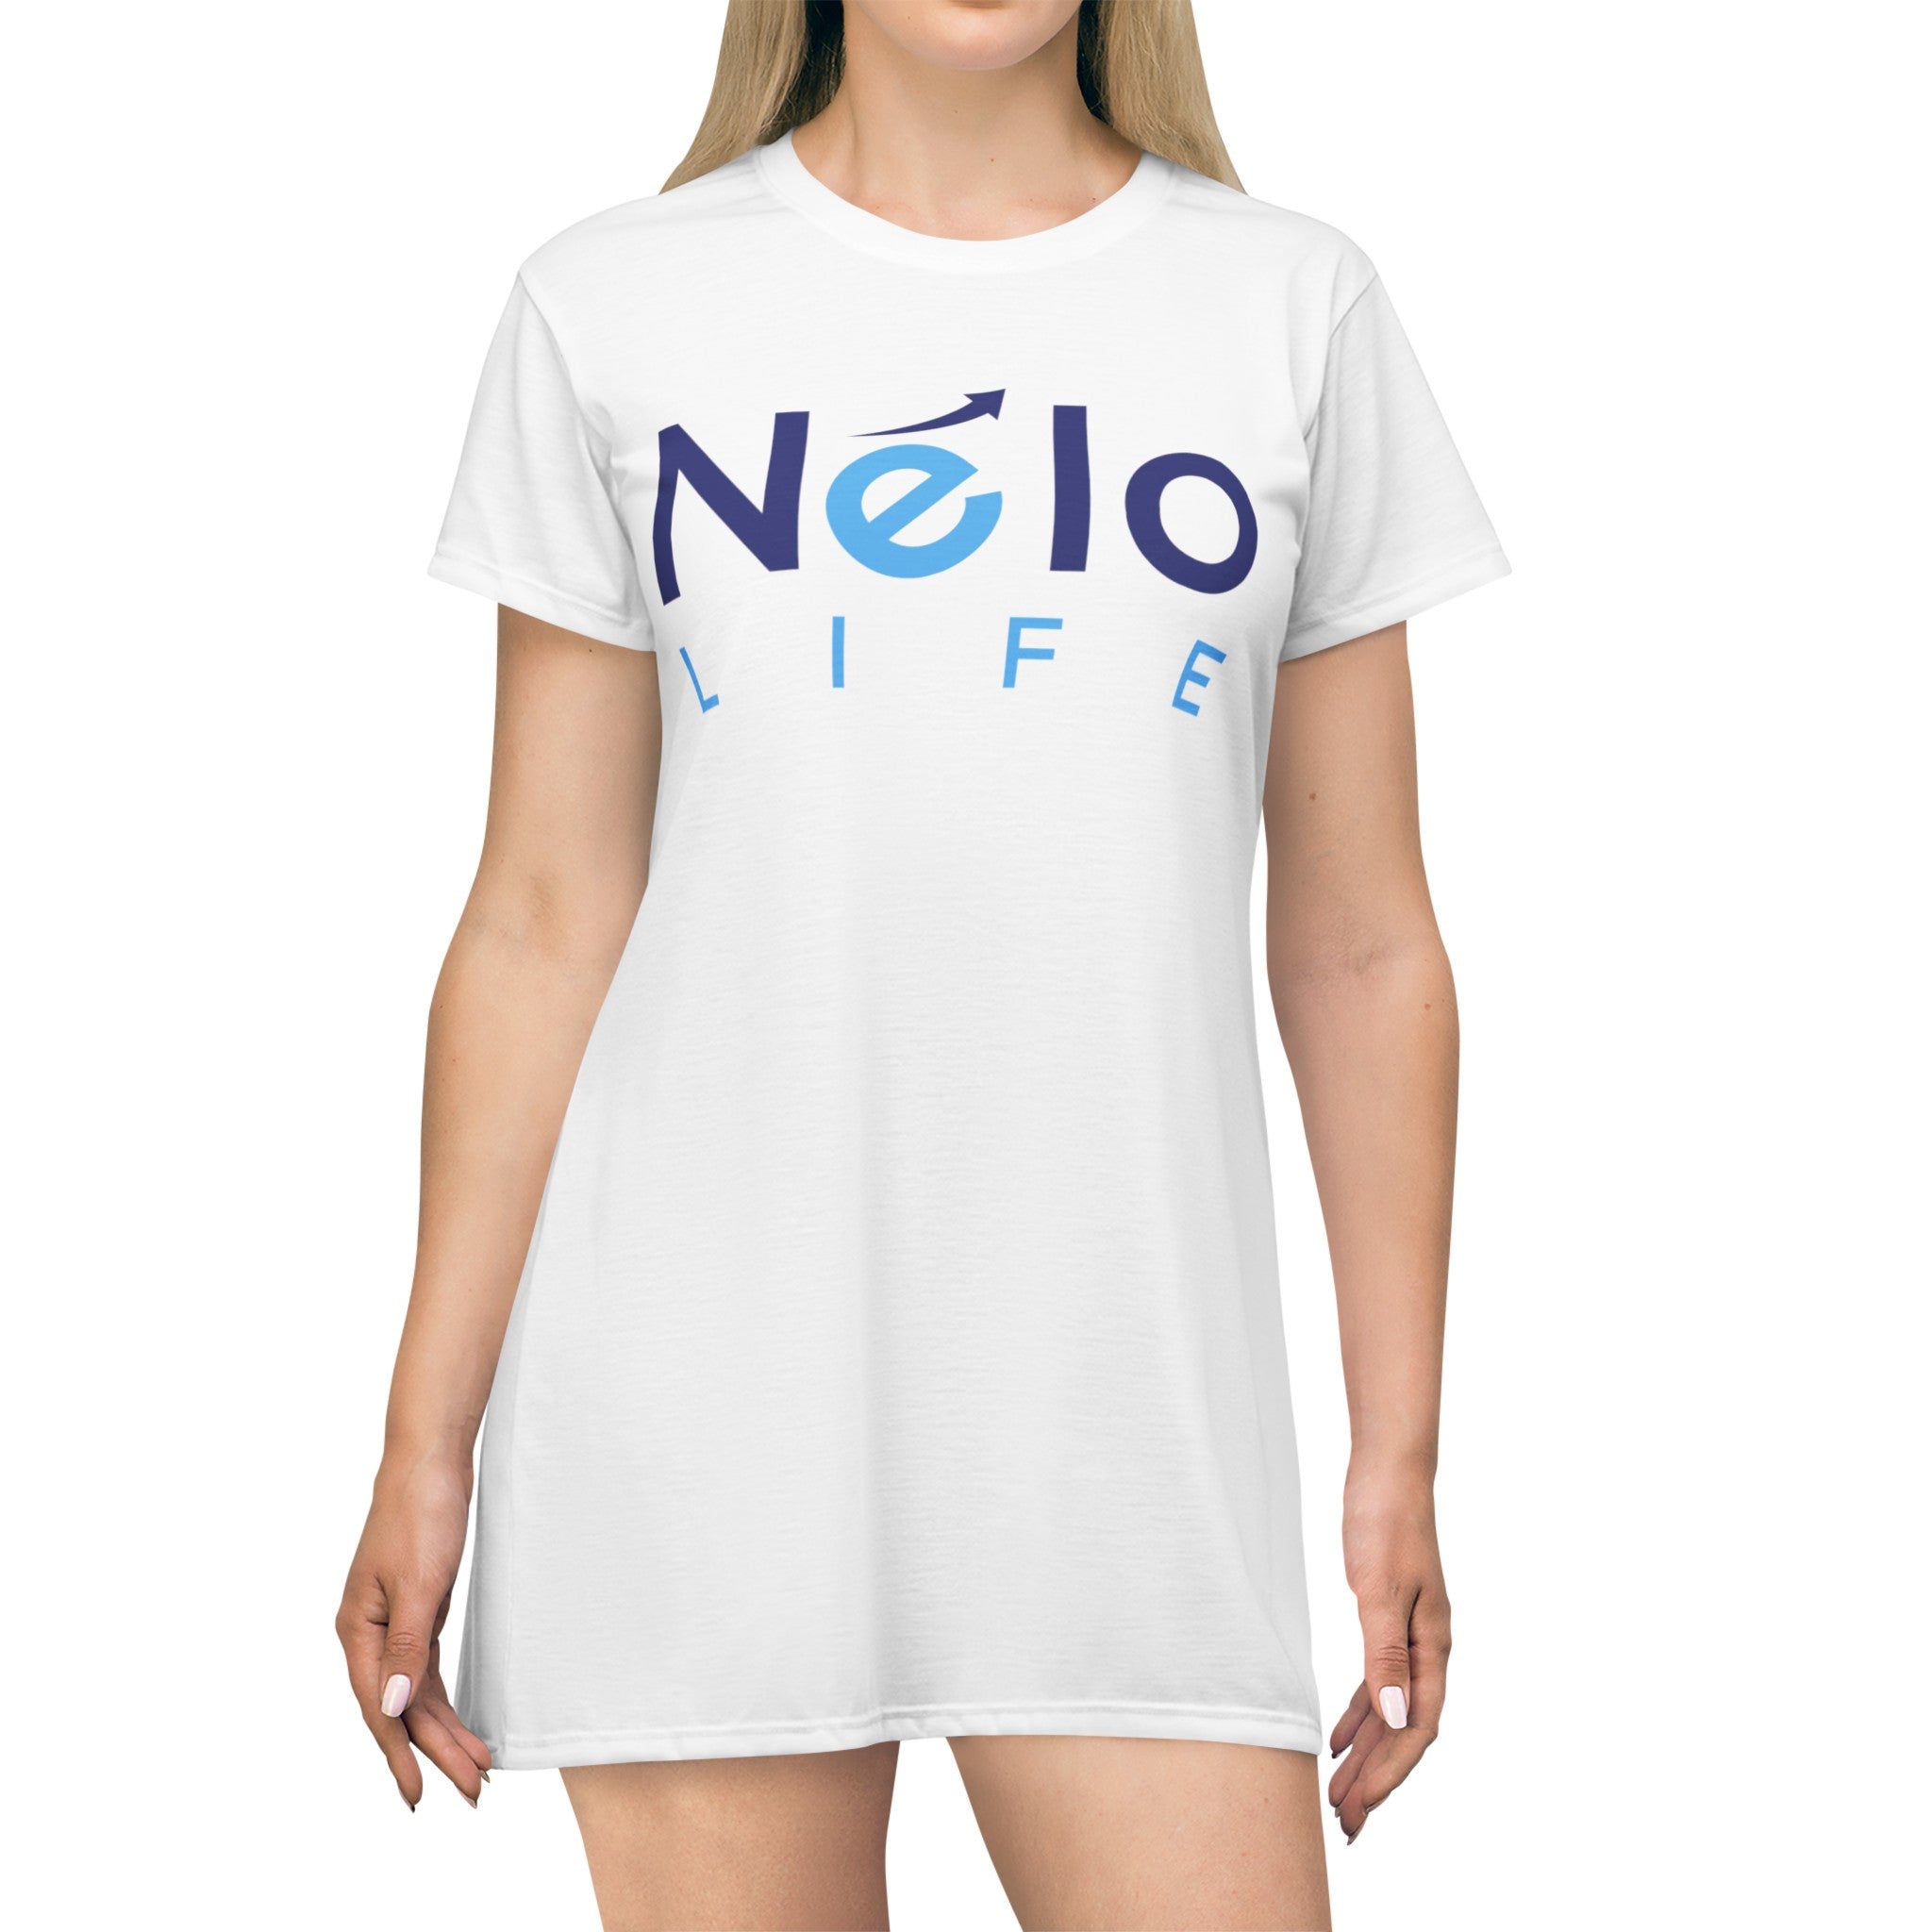 NELO LIFE T-Shirt Dress